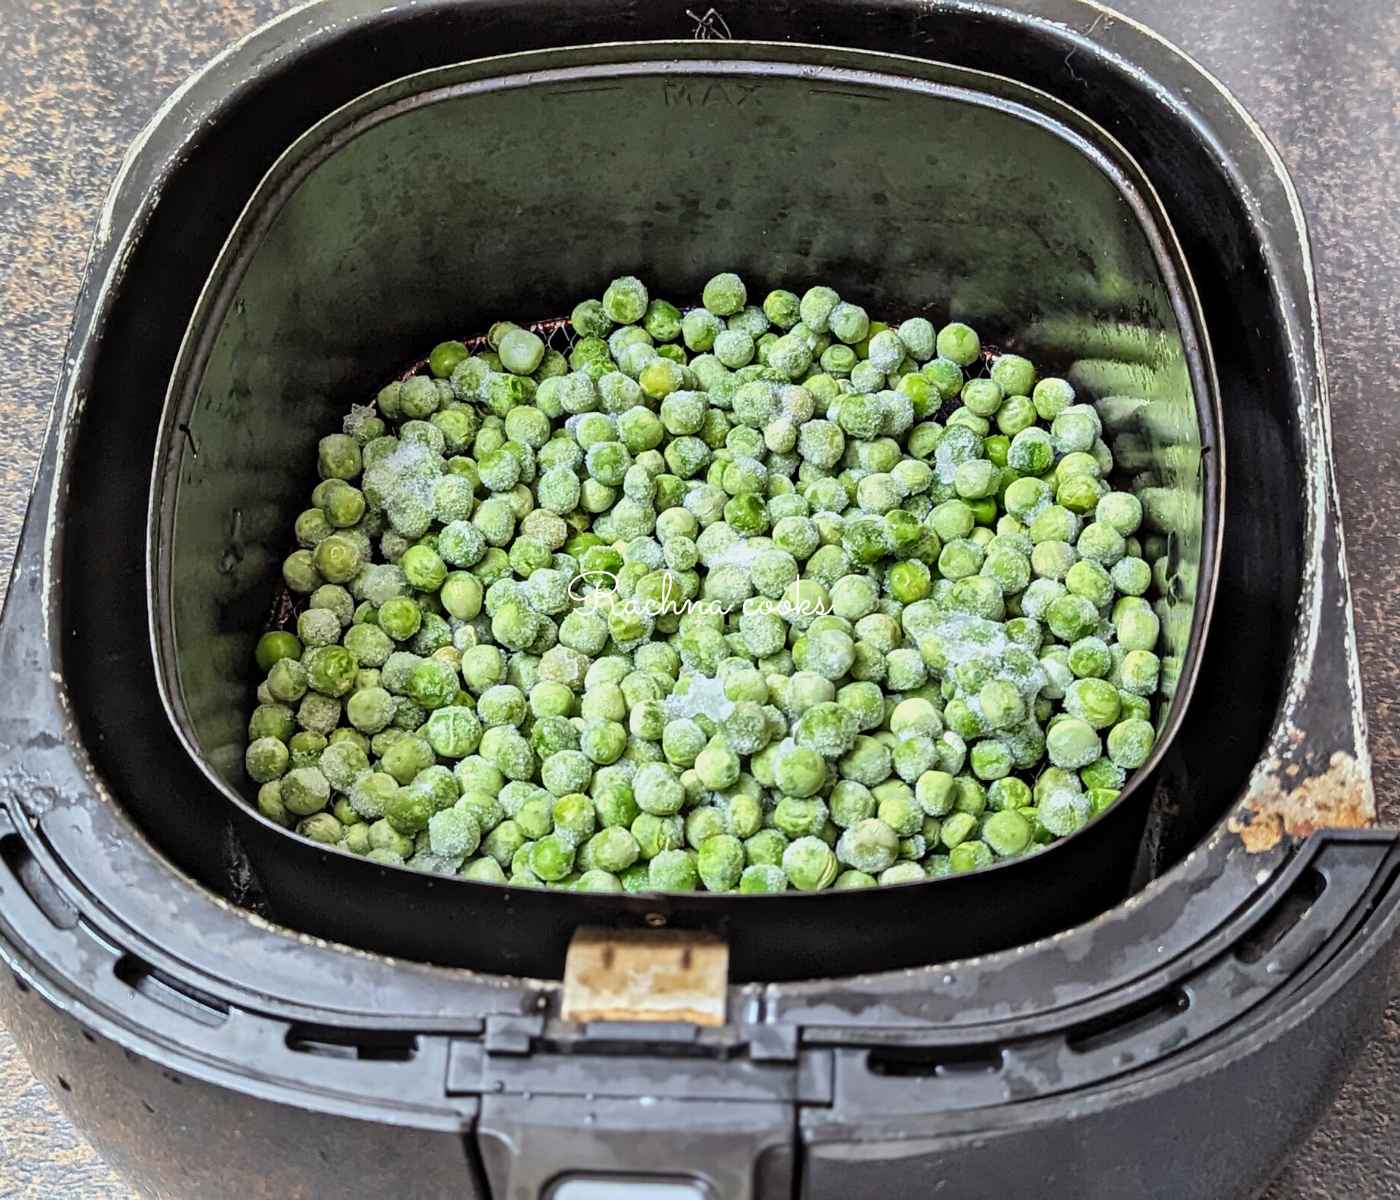 Frozen peas in an air fryer basket